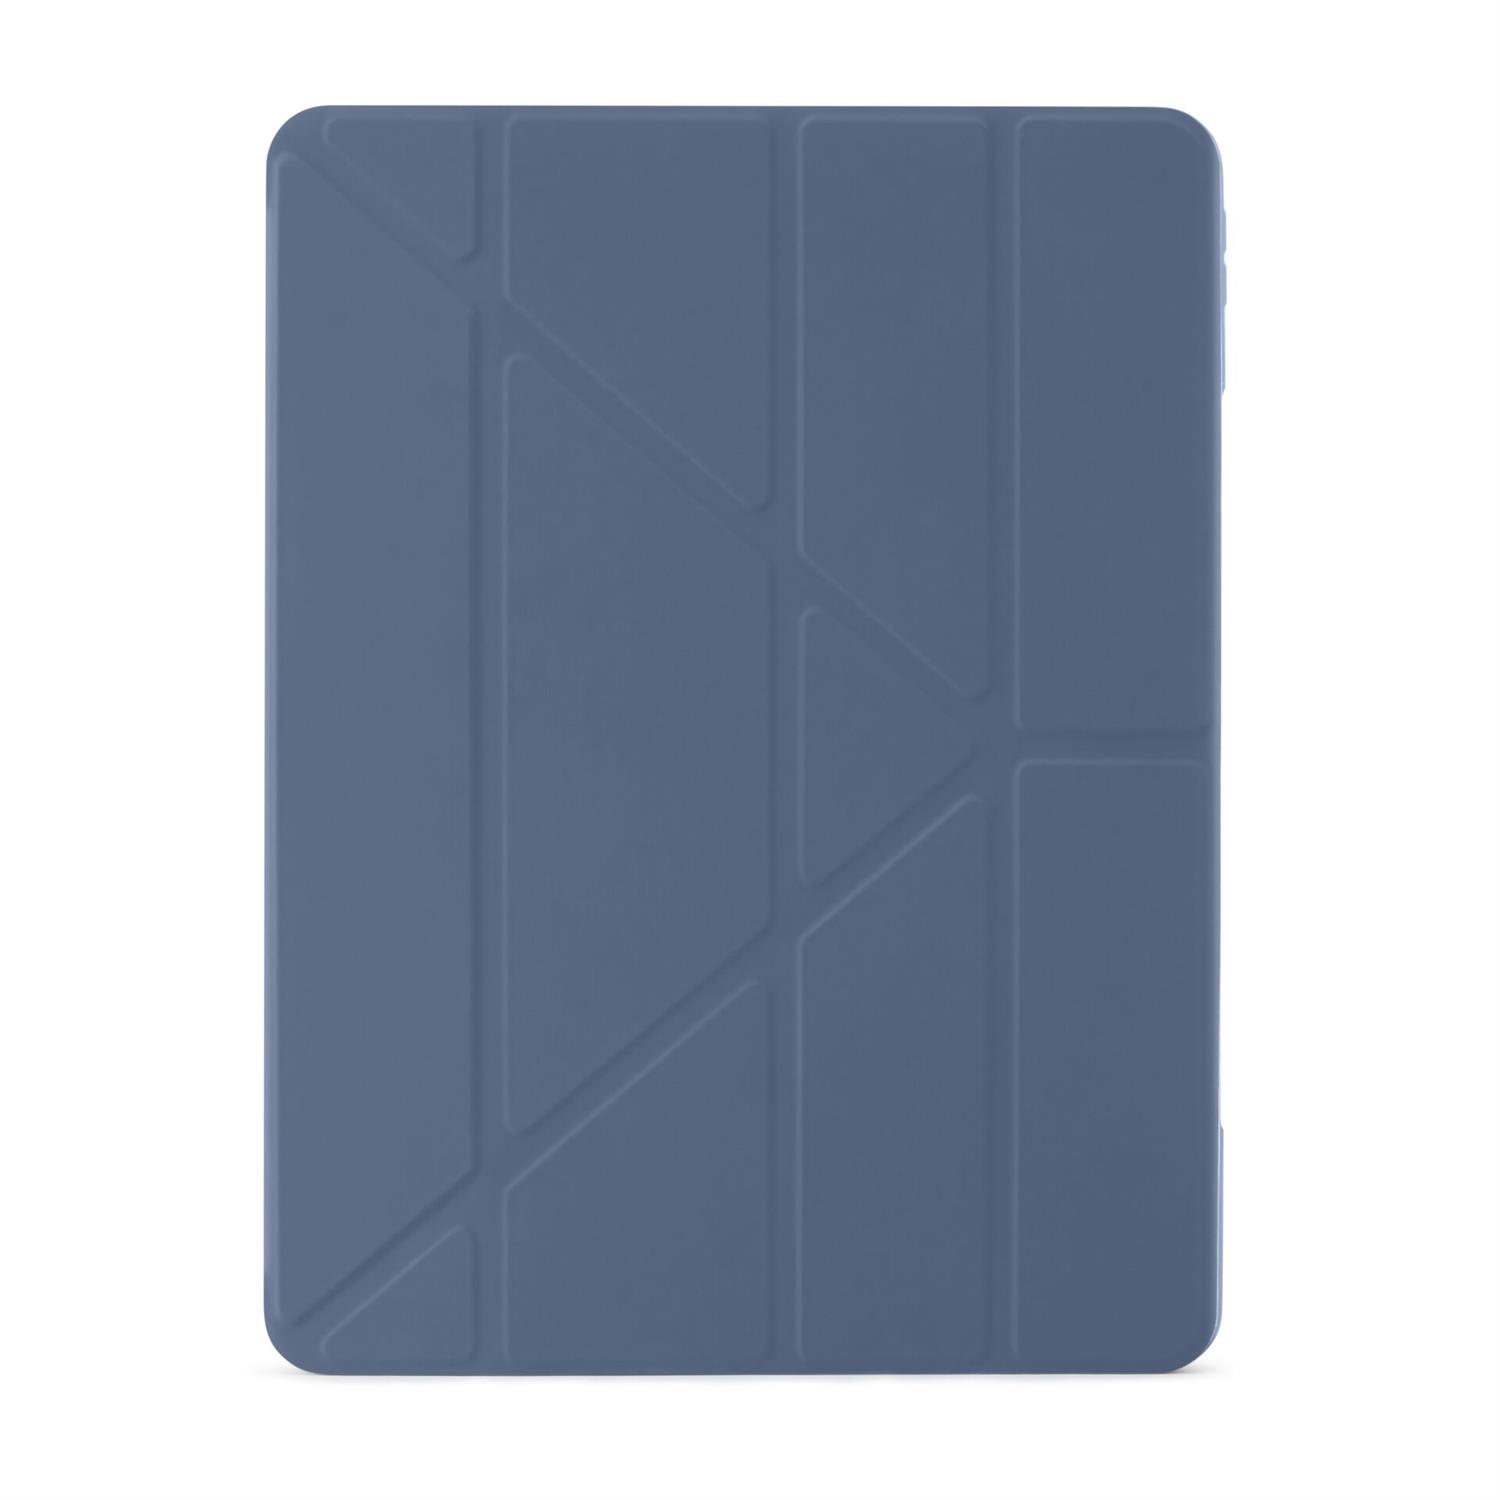 Pipetto Origami No1 OriginalCase für iPad Pro 12.9 (6th Gen) in Navy